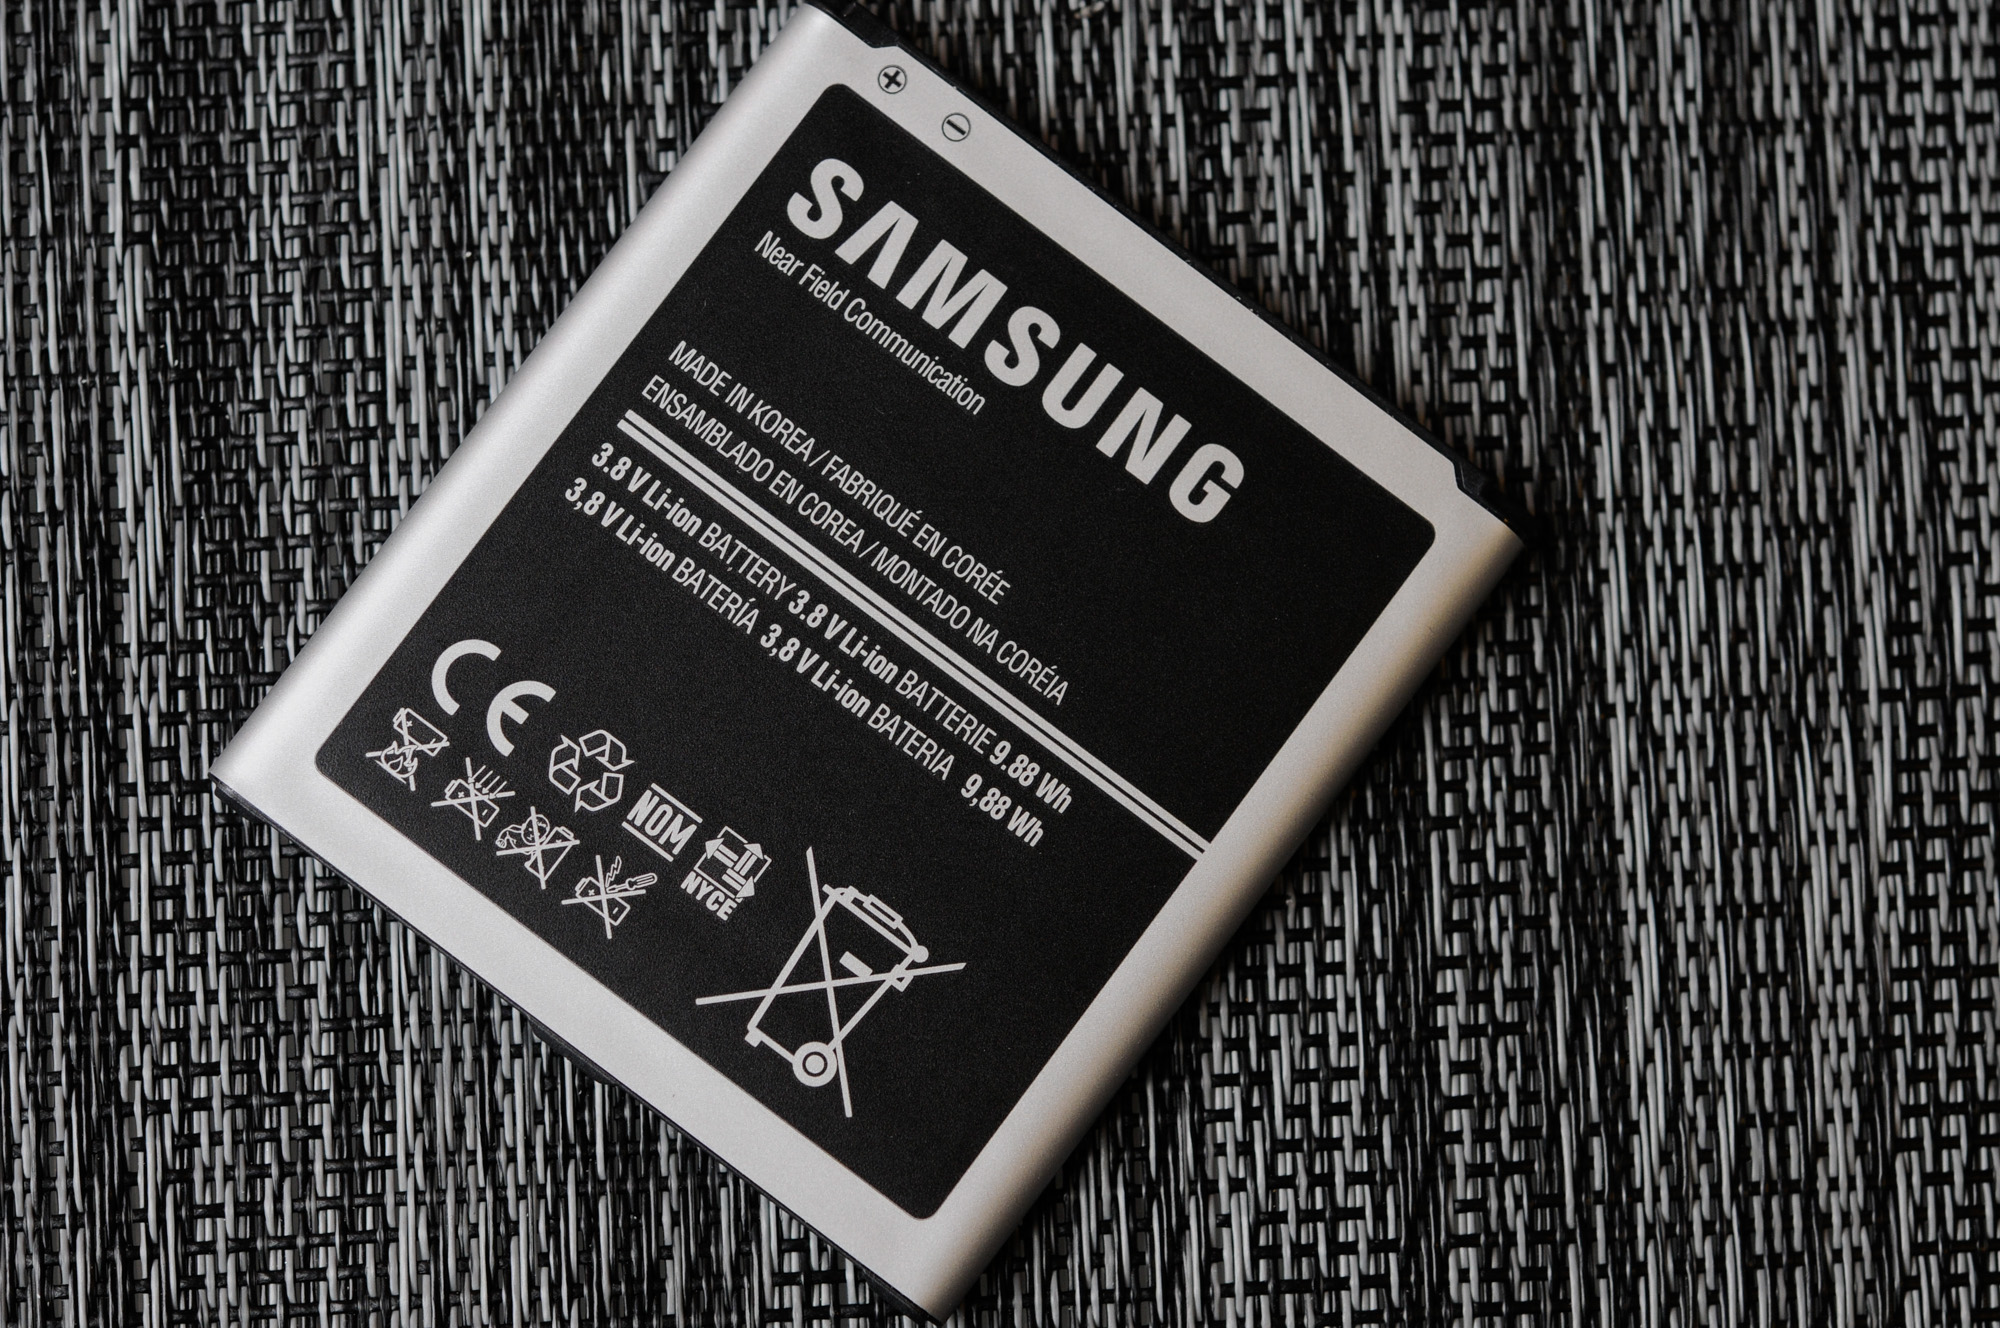 Mẹo tiết kiệm pin cho Samsung Galaxy S4